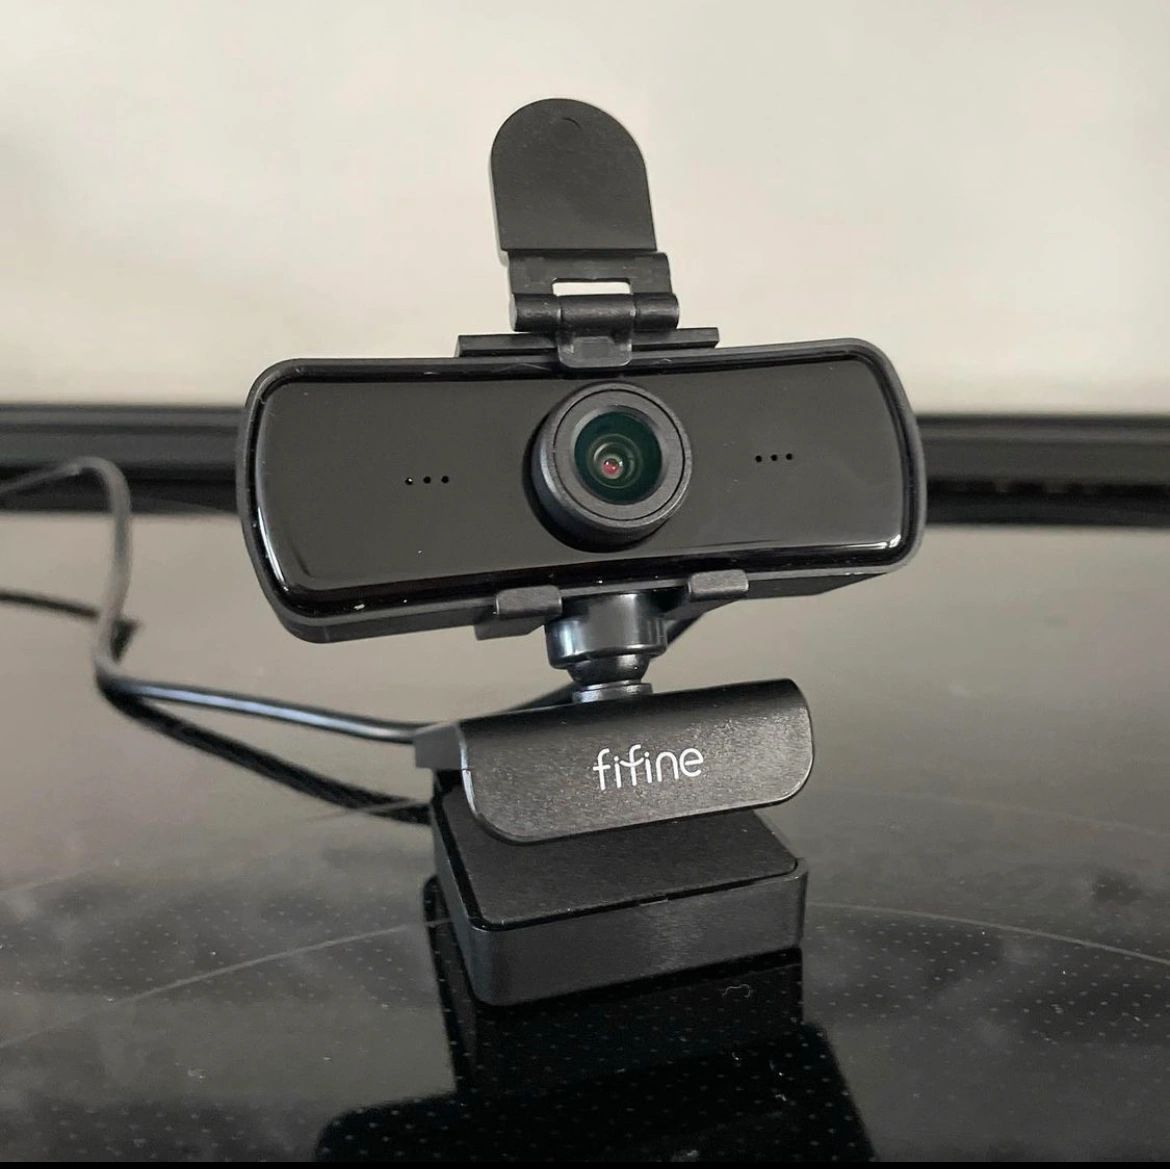 Fifine K420 2K Webcam: One FINE Webcam!